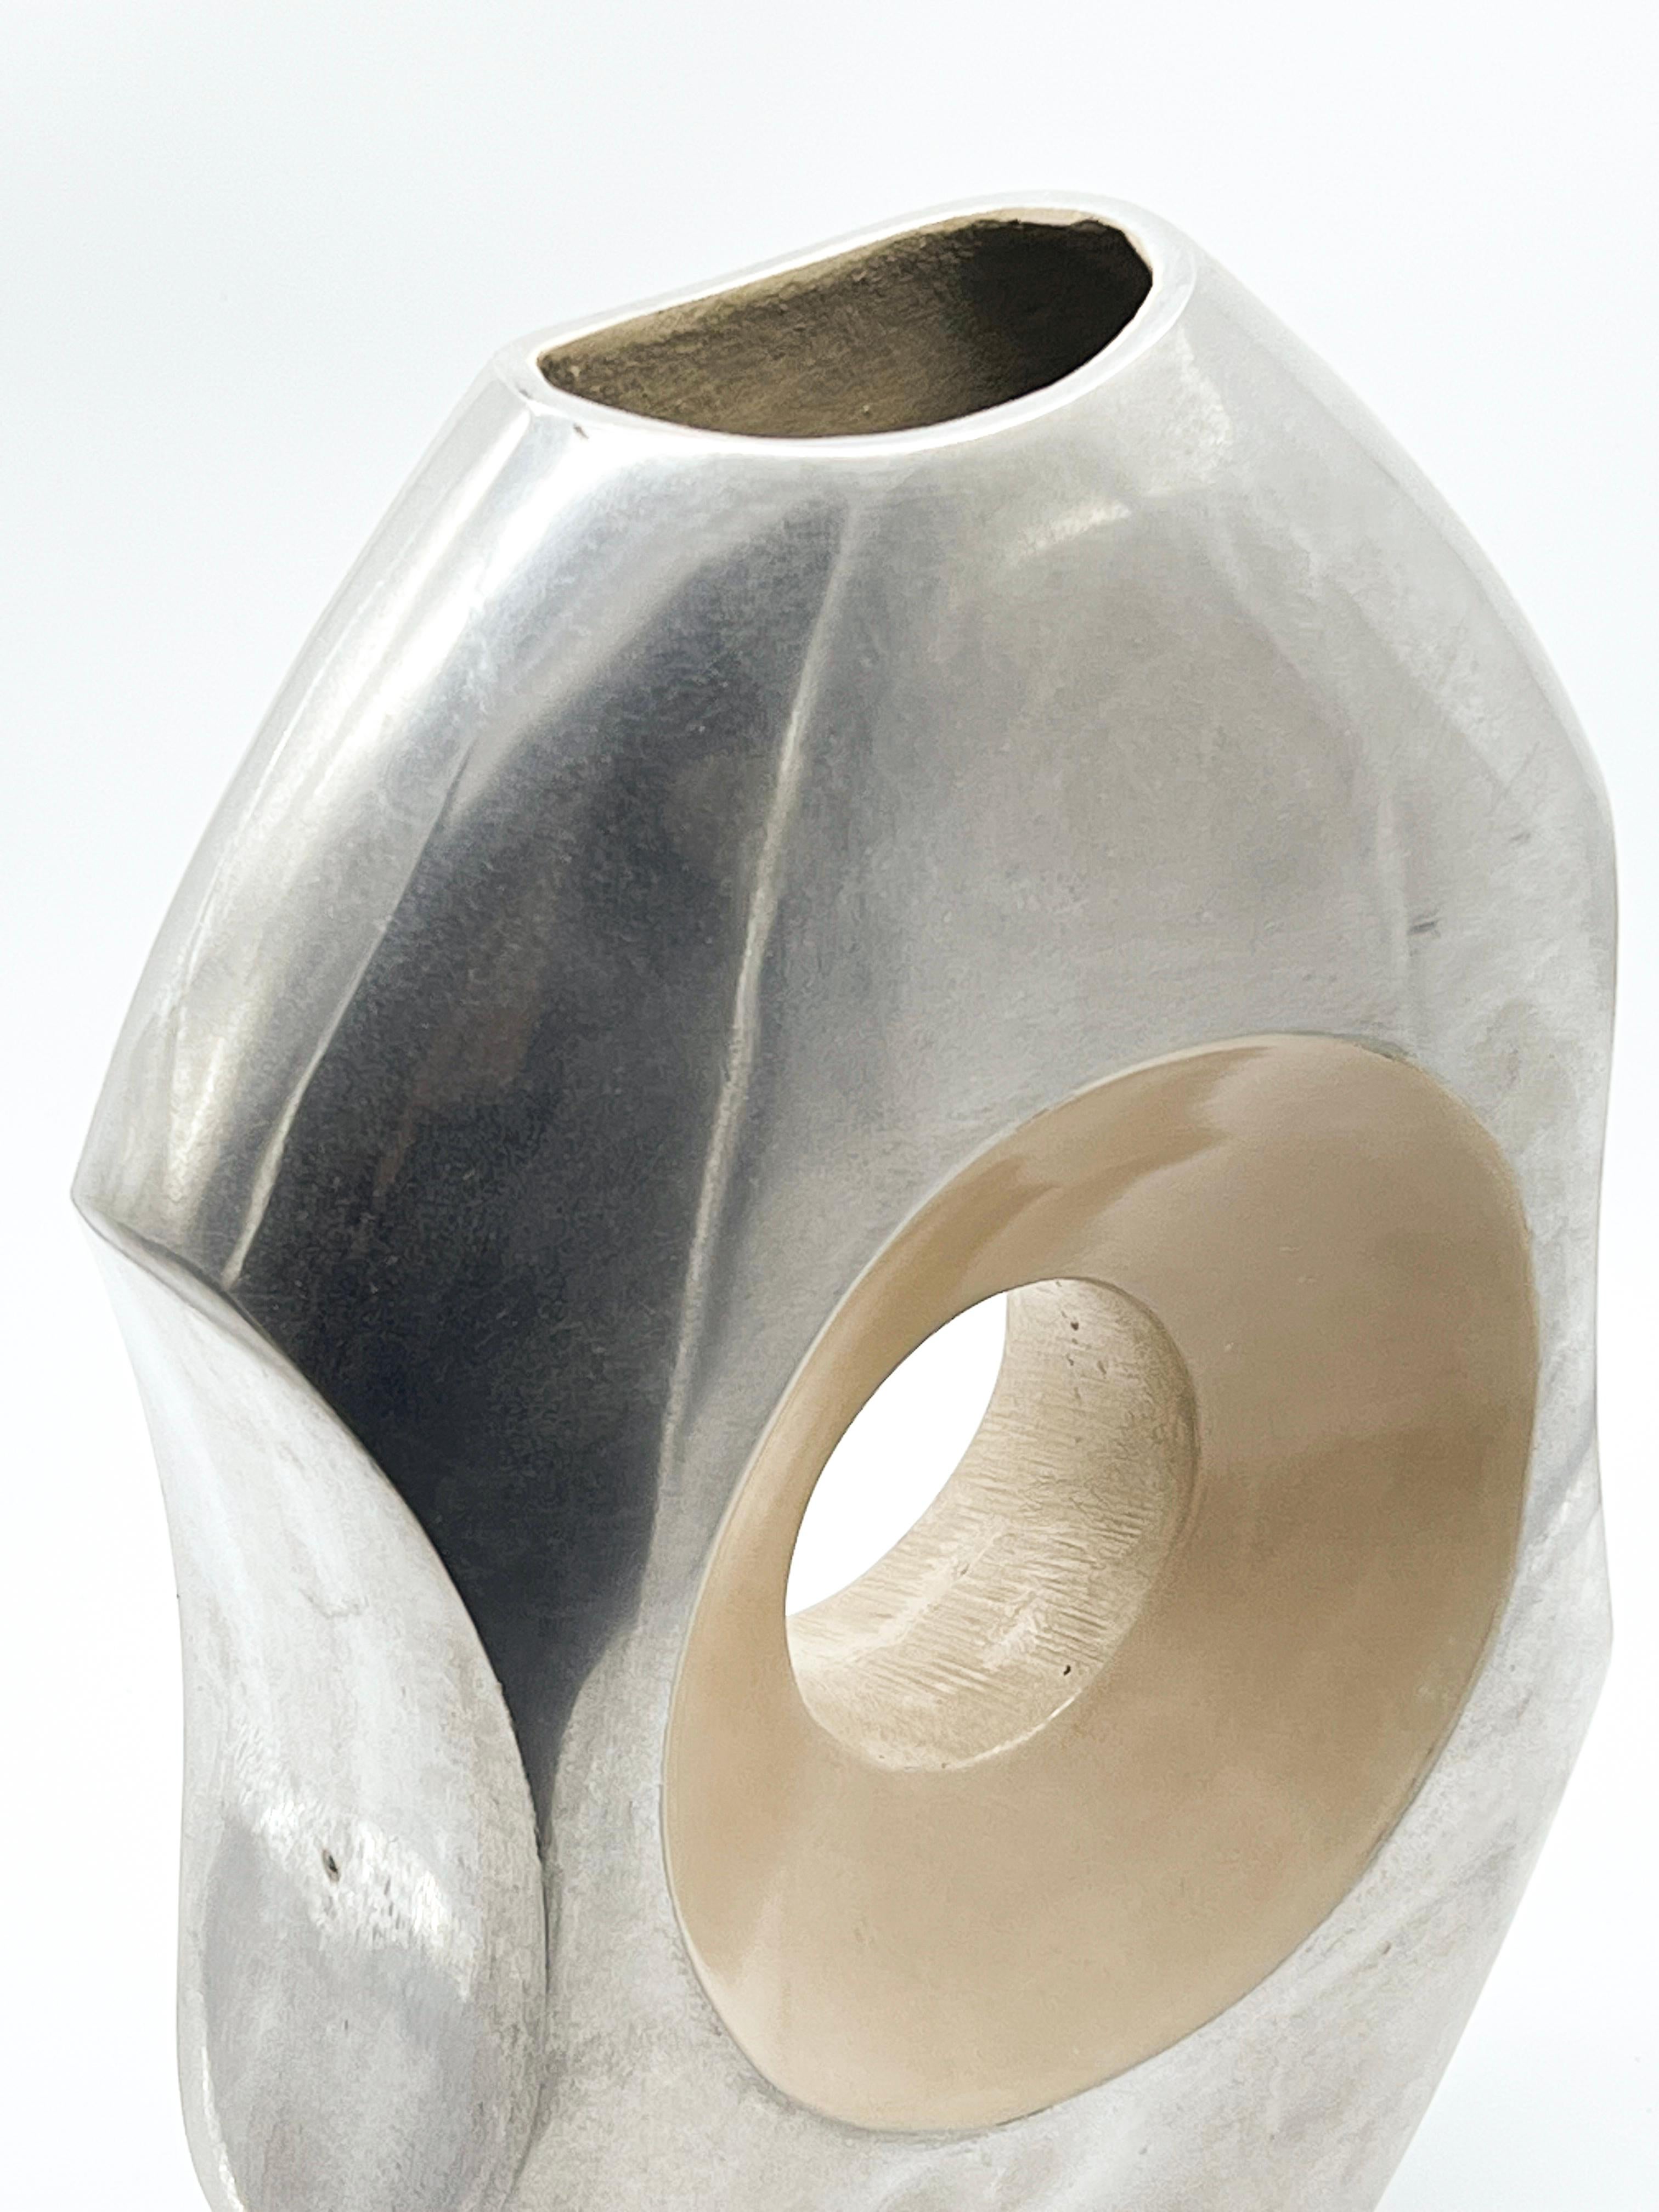 Big Sculptural Space Age Vase, Cast Aluminium, Italian Collectible Decorative In Good Condition For Sale In Milano, IT